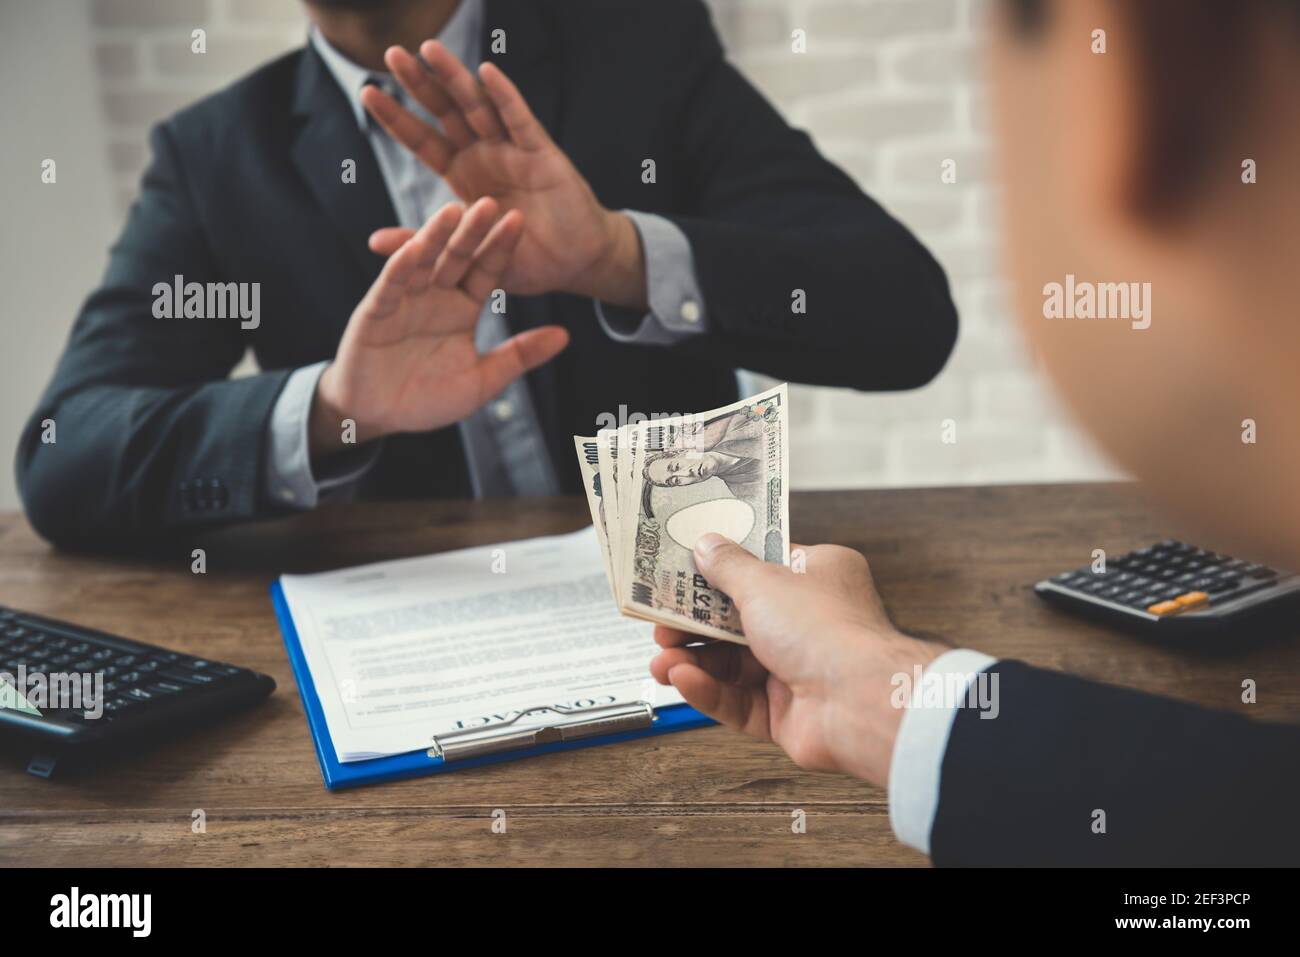 Businessman refusing money - anti bribery and corruption concepts Stock Photo